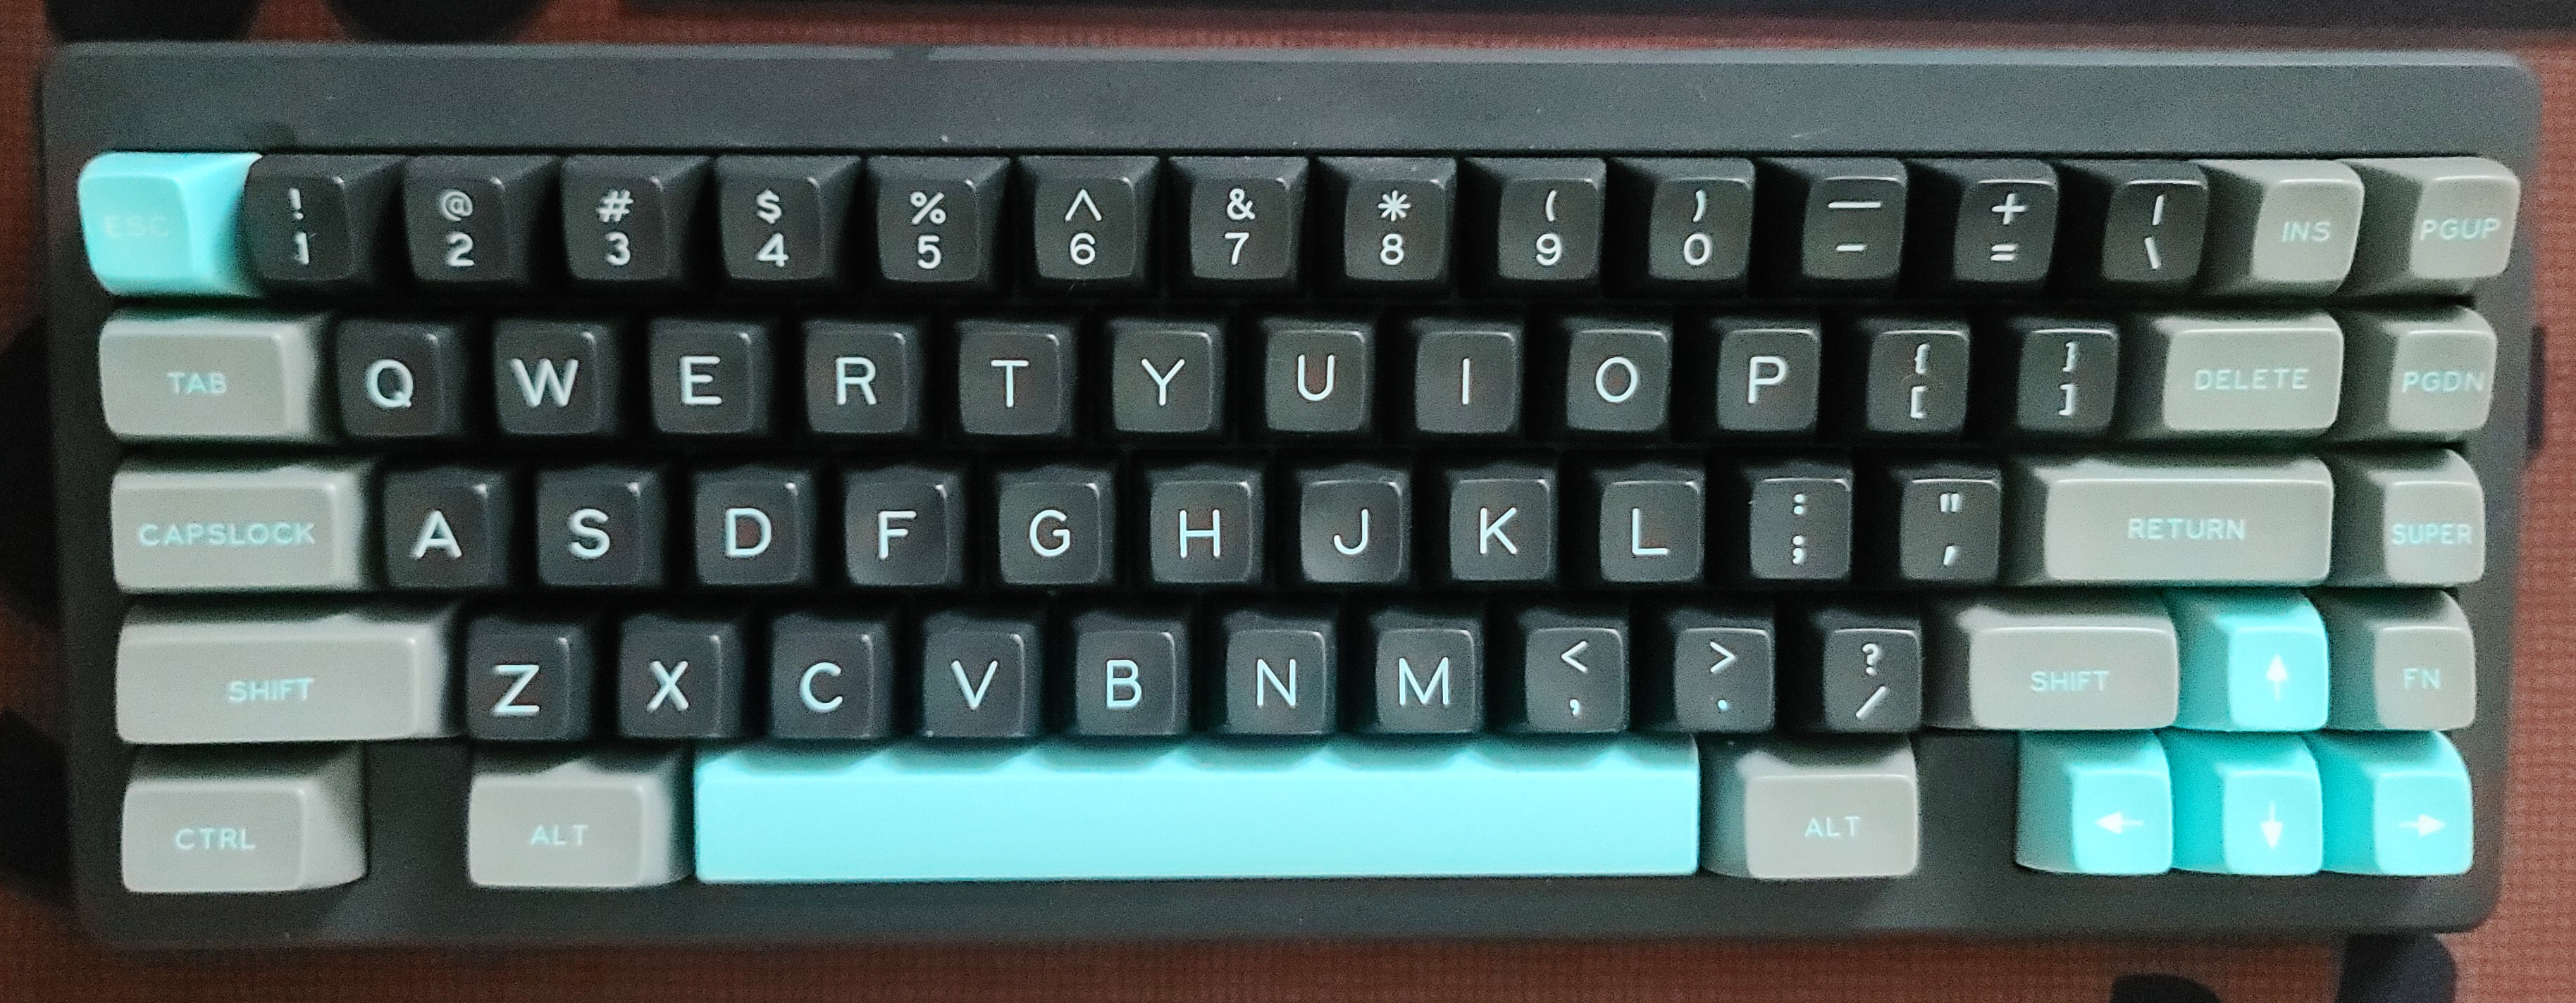 Bauer Keyboard